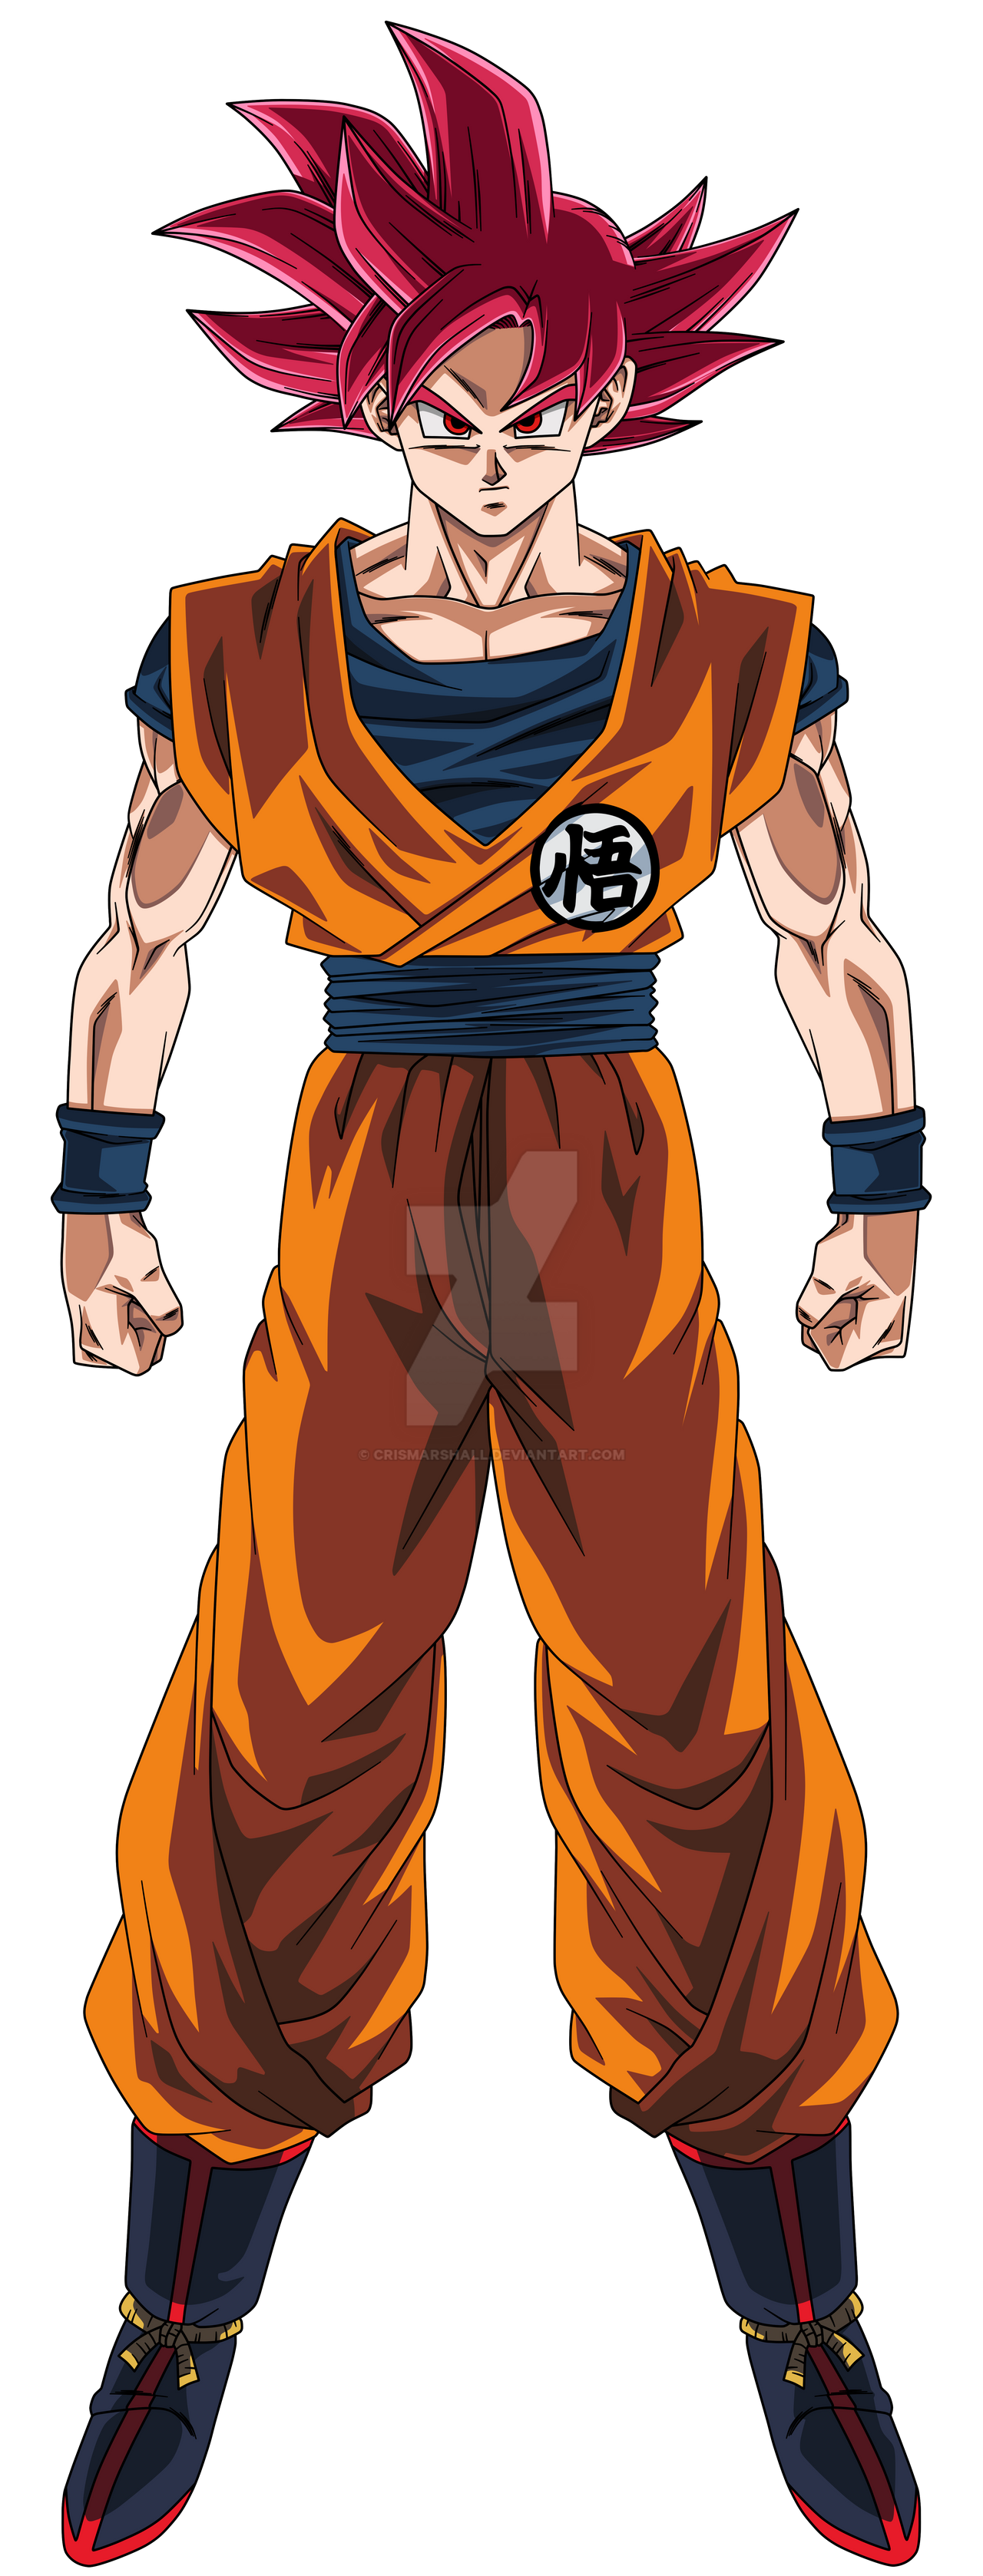 Goku Super Saiyajin 4 by arbiter720 on DeviantArt  Anime dragon ball goku,  Anime dragon ball super, Anime dragon ball